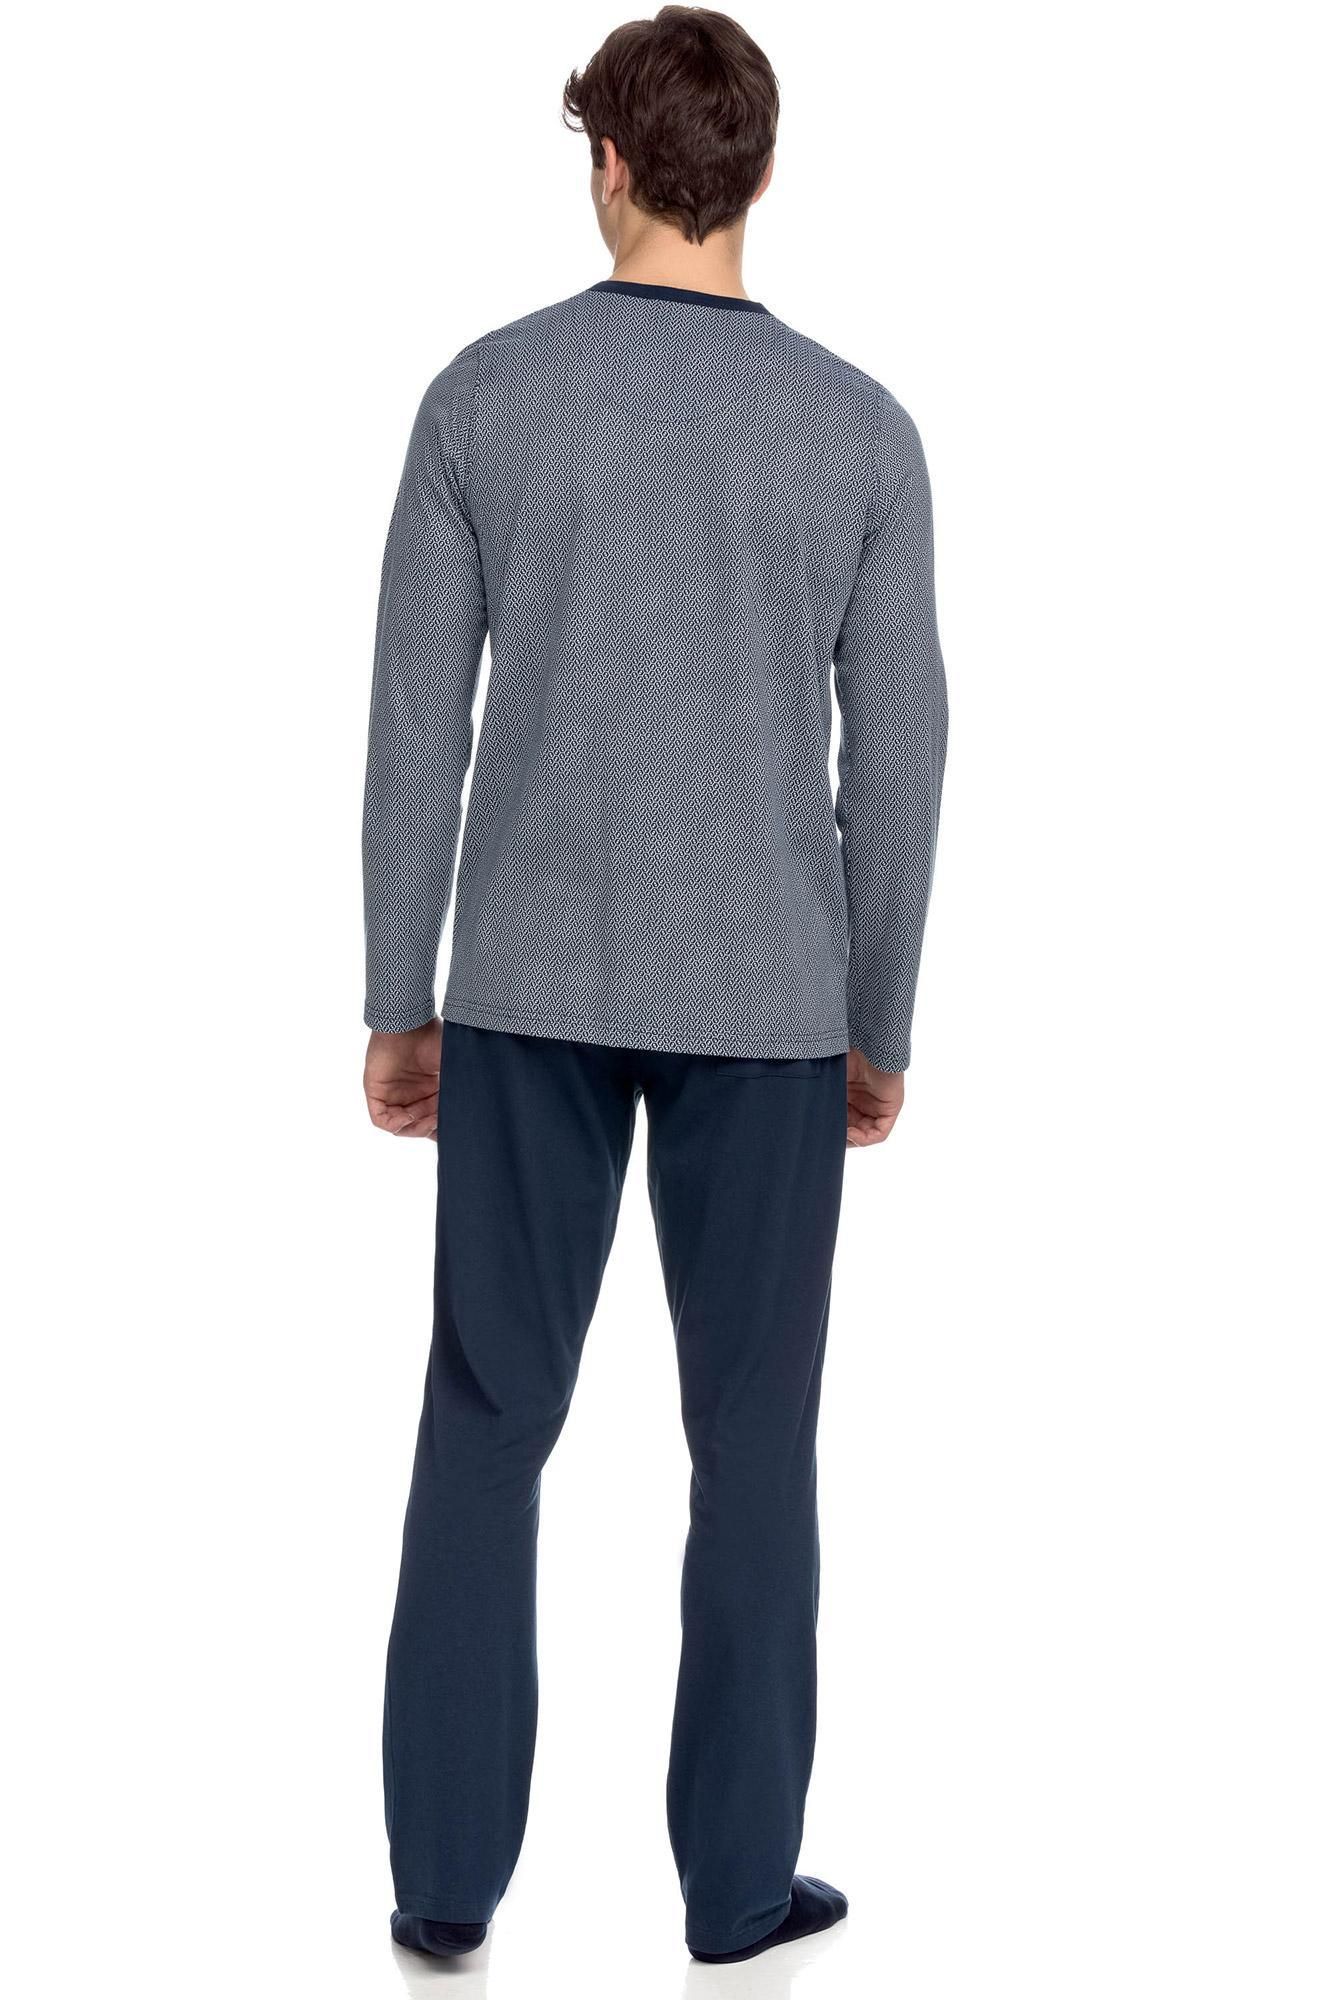 Men’ Cotton Pyjamas with button placket